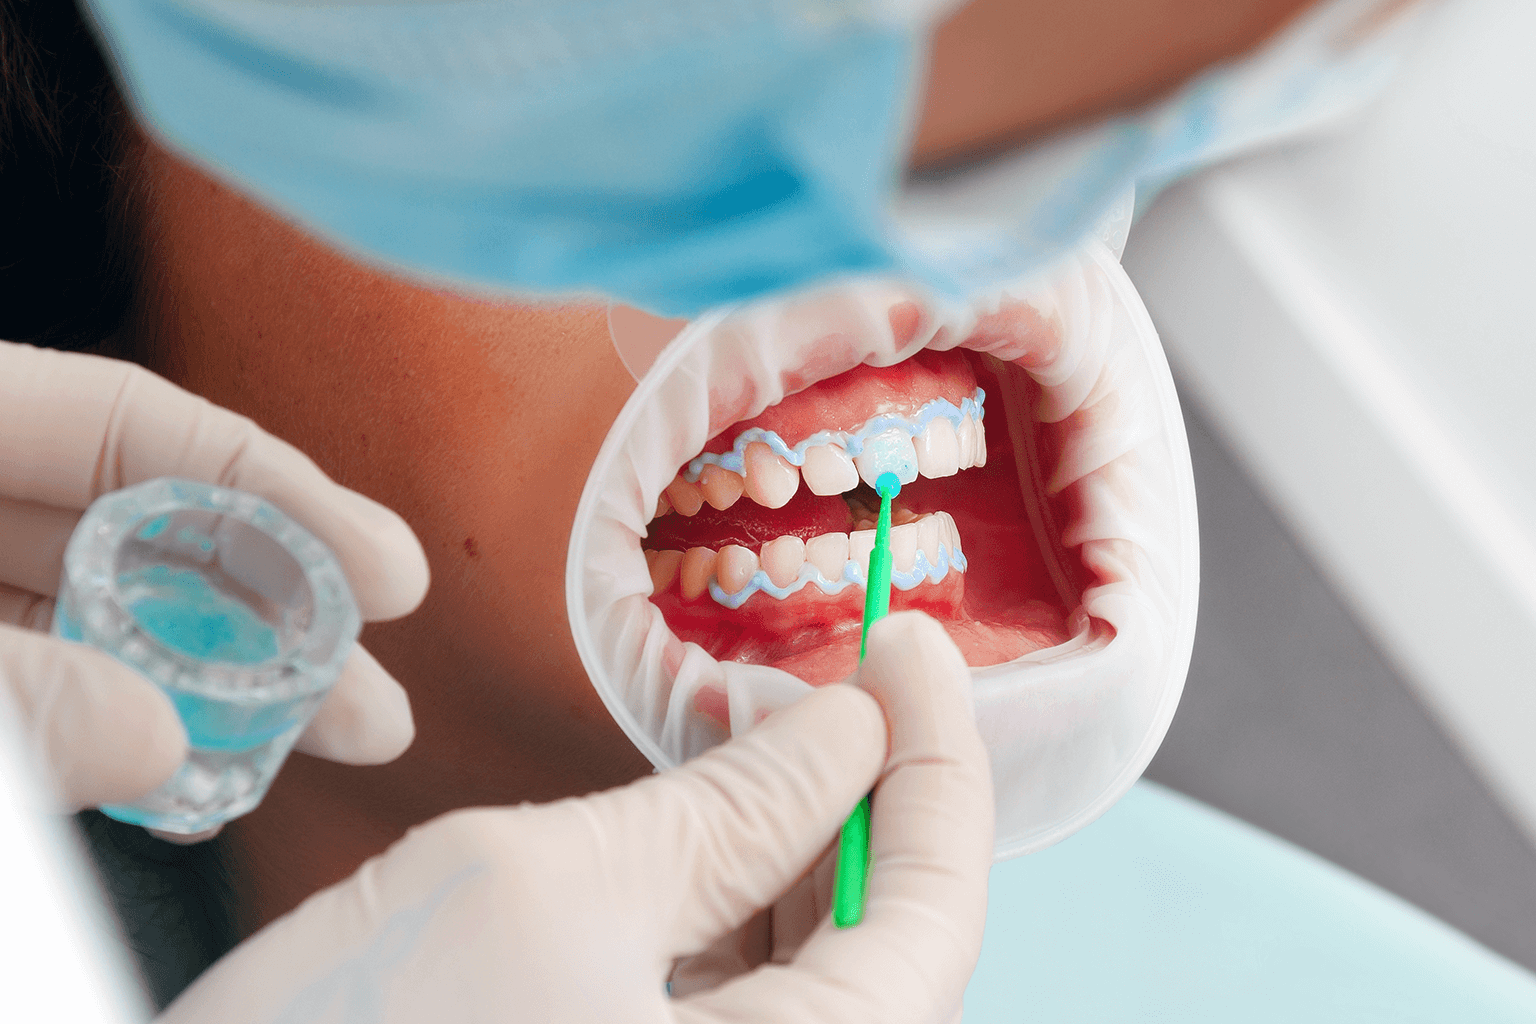 patient wearing dental damn having whitening solution applied to teeth